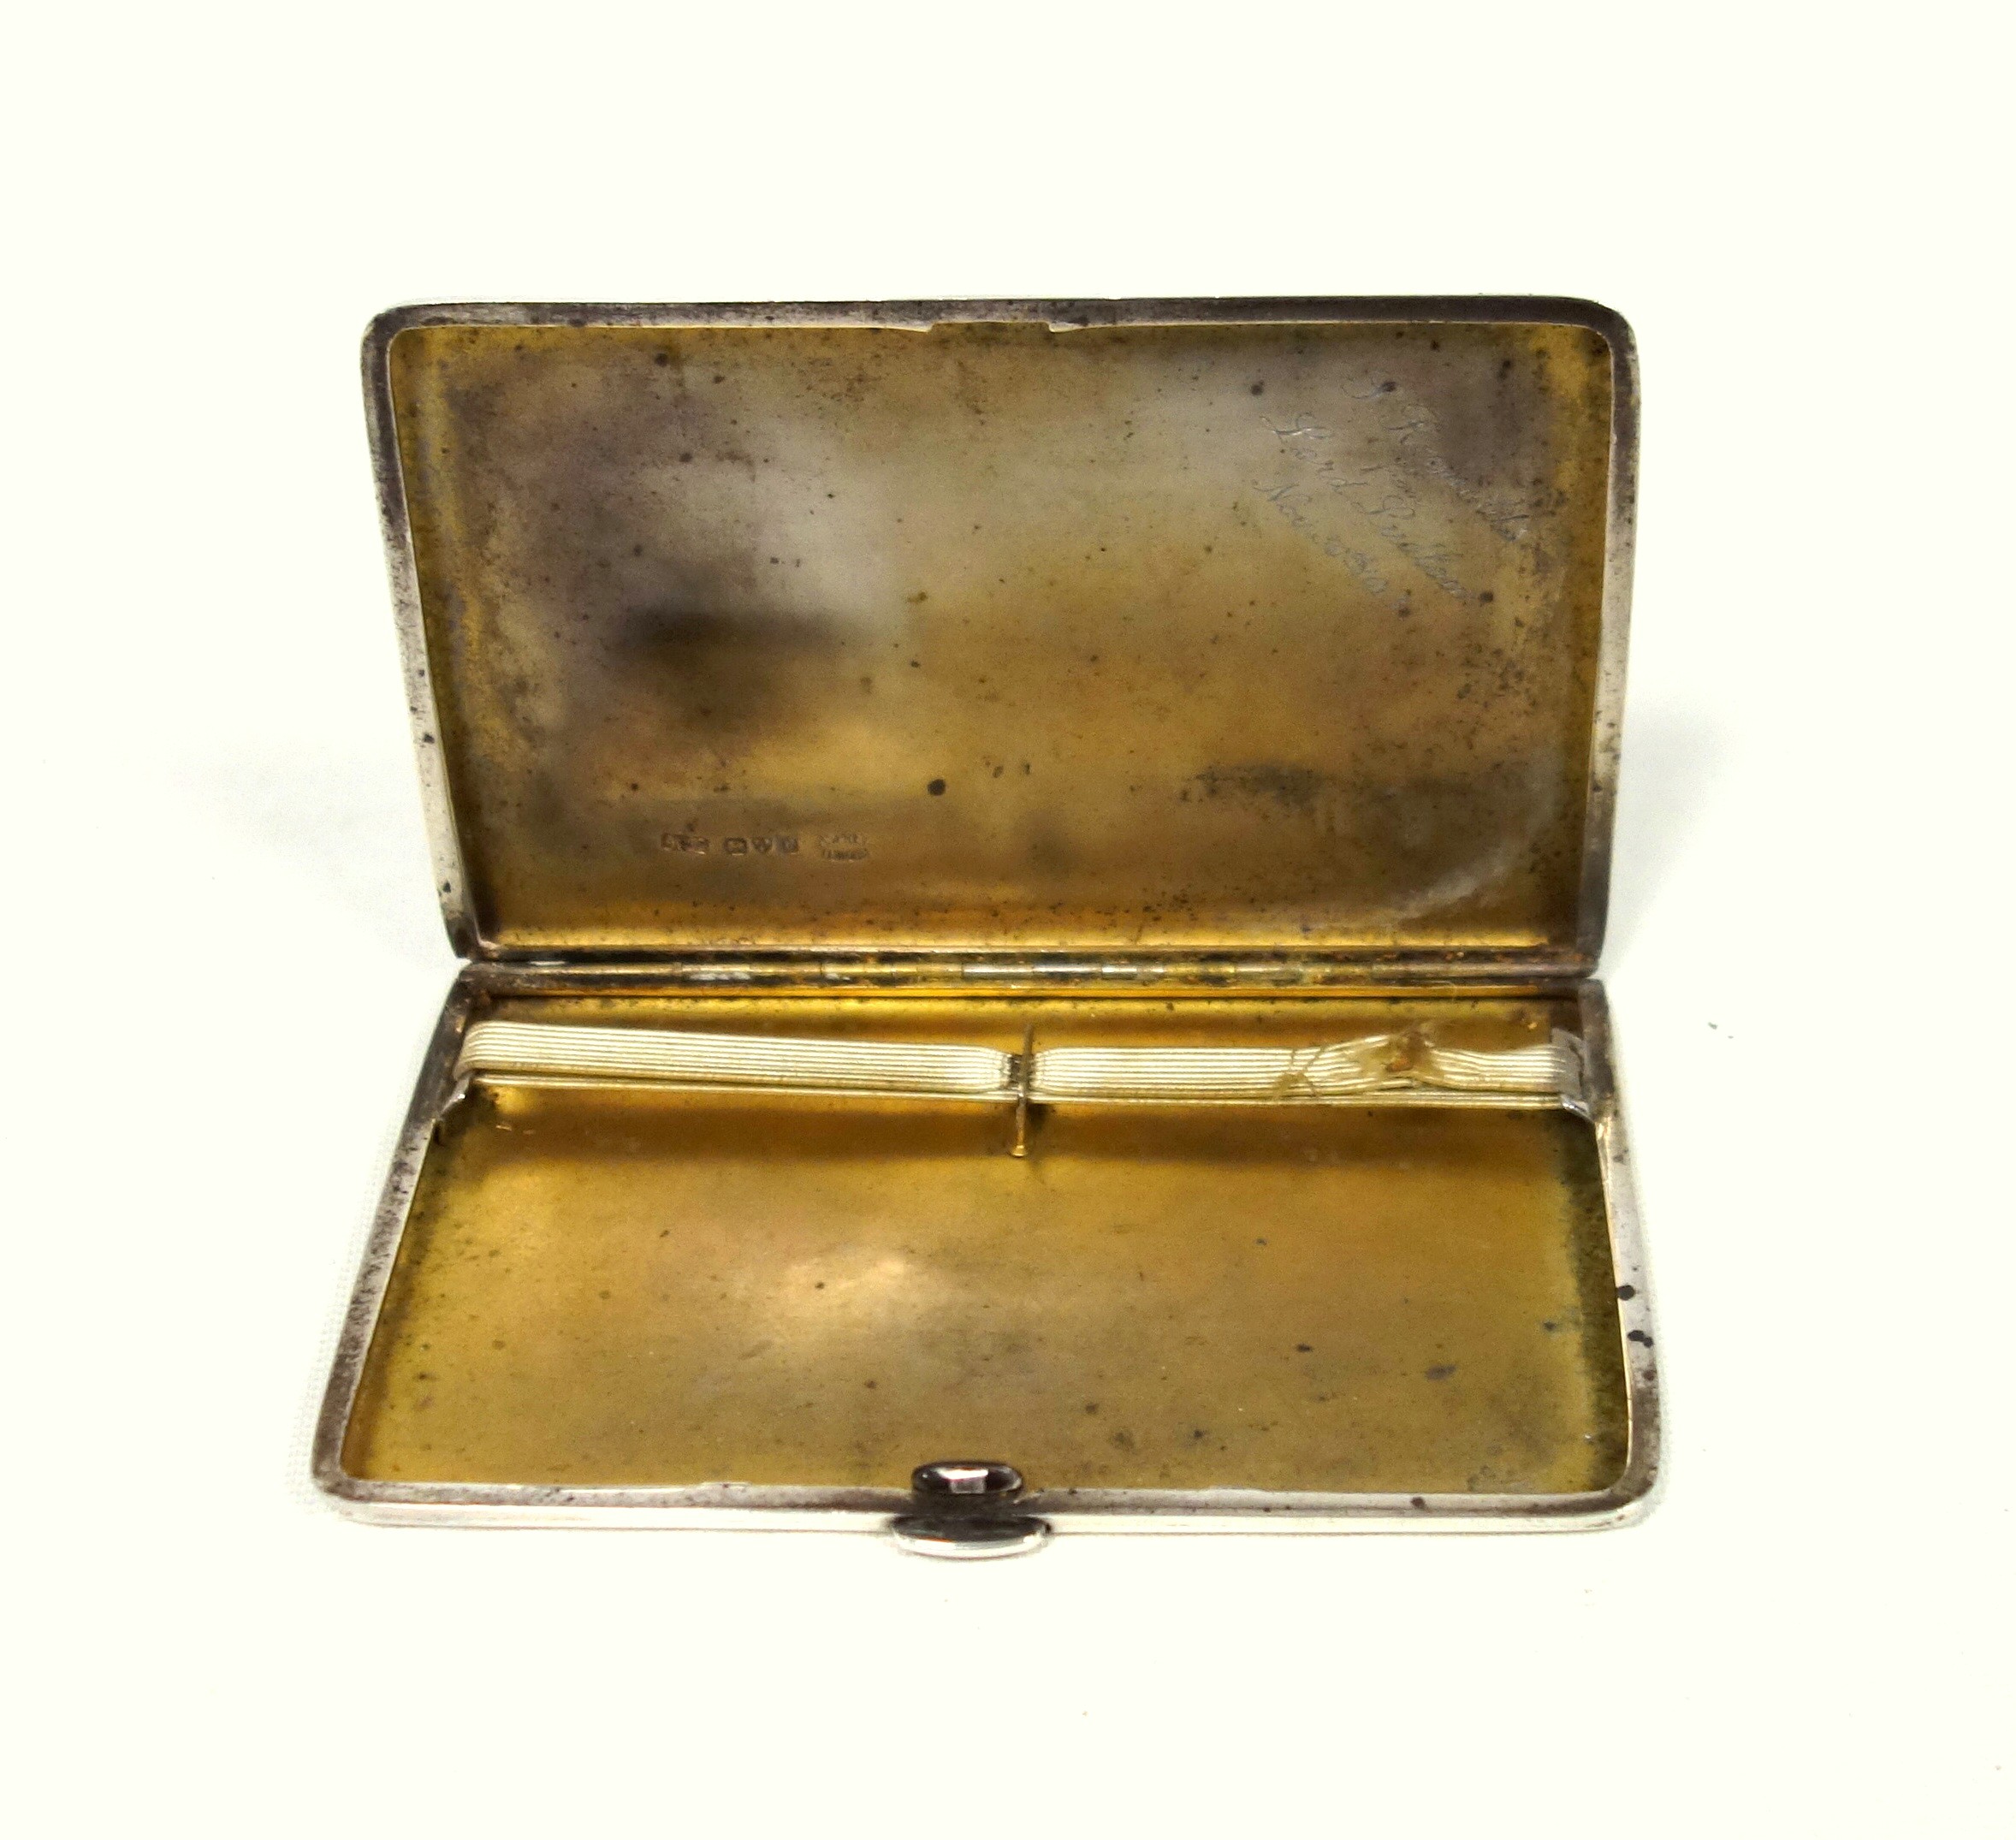 George V silver rectangular cigarette case with a gilt interior and presentation inscription "S. - Image 3 of 5